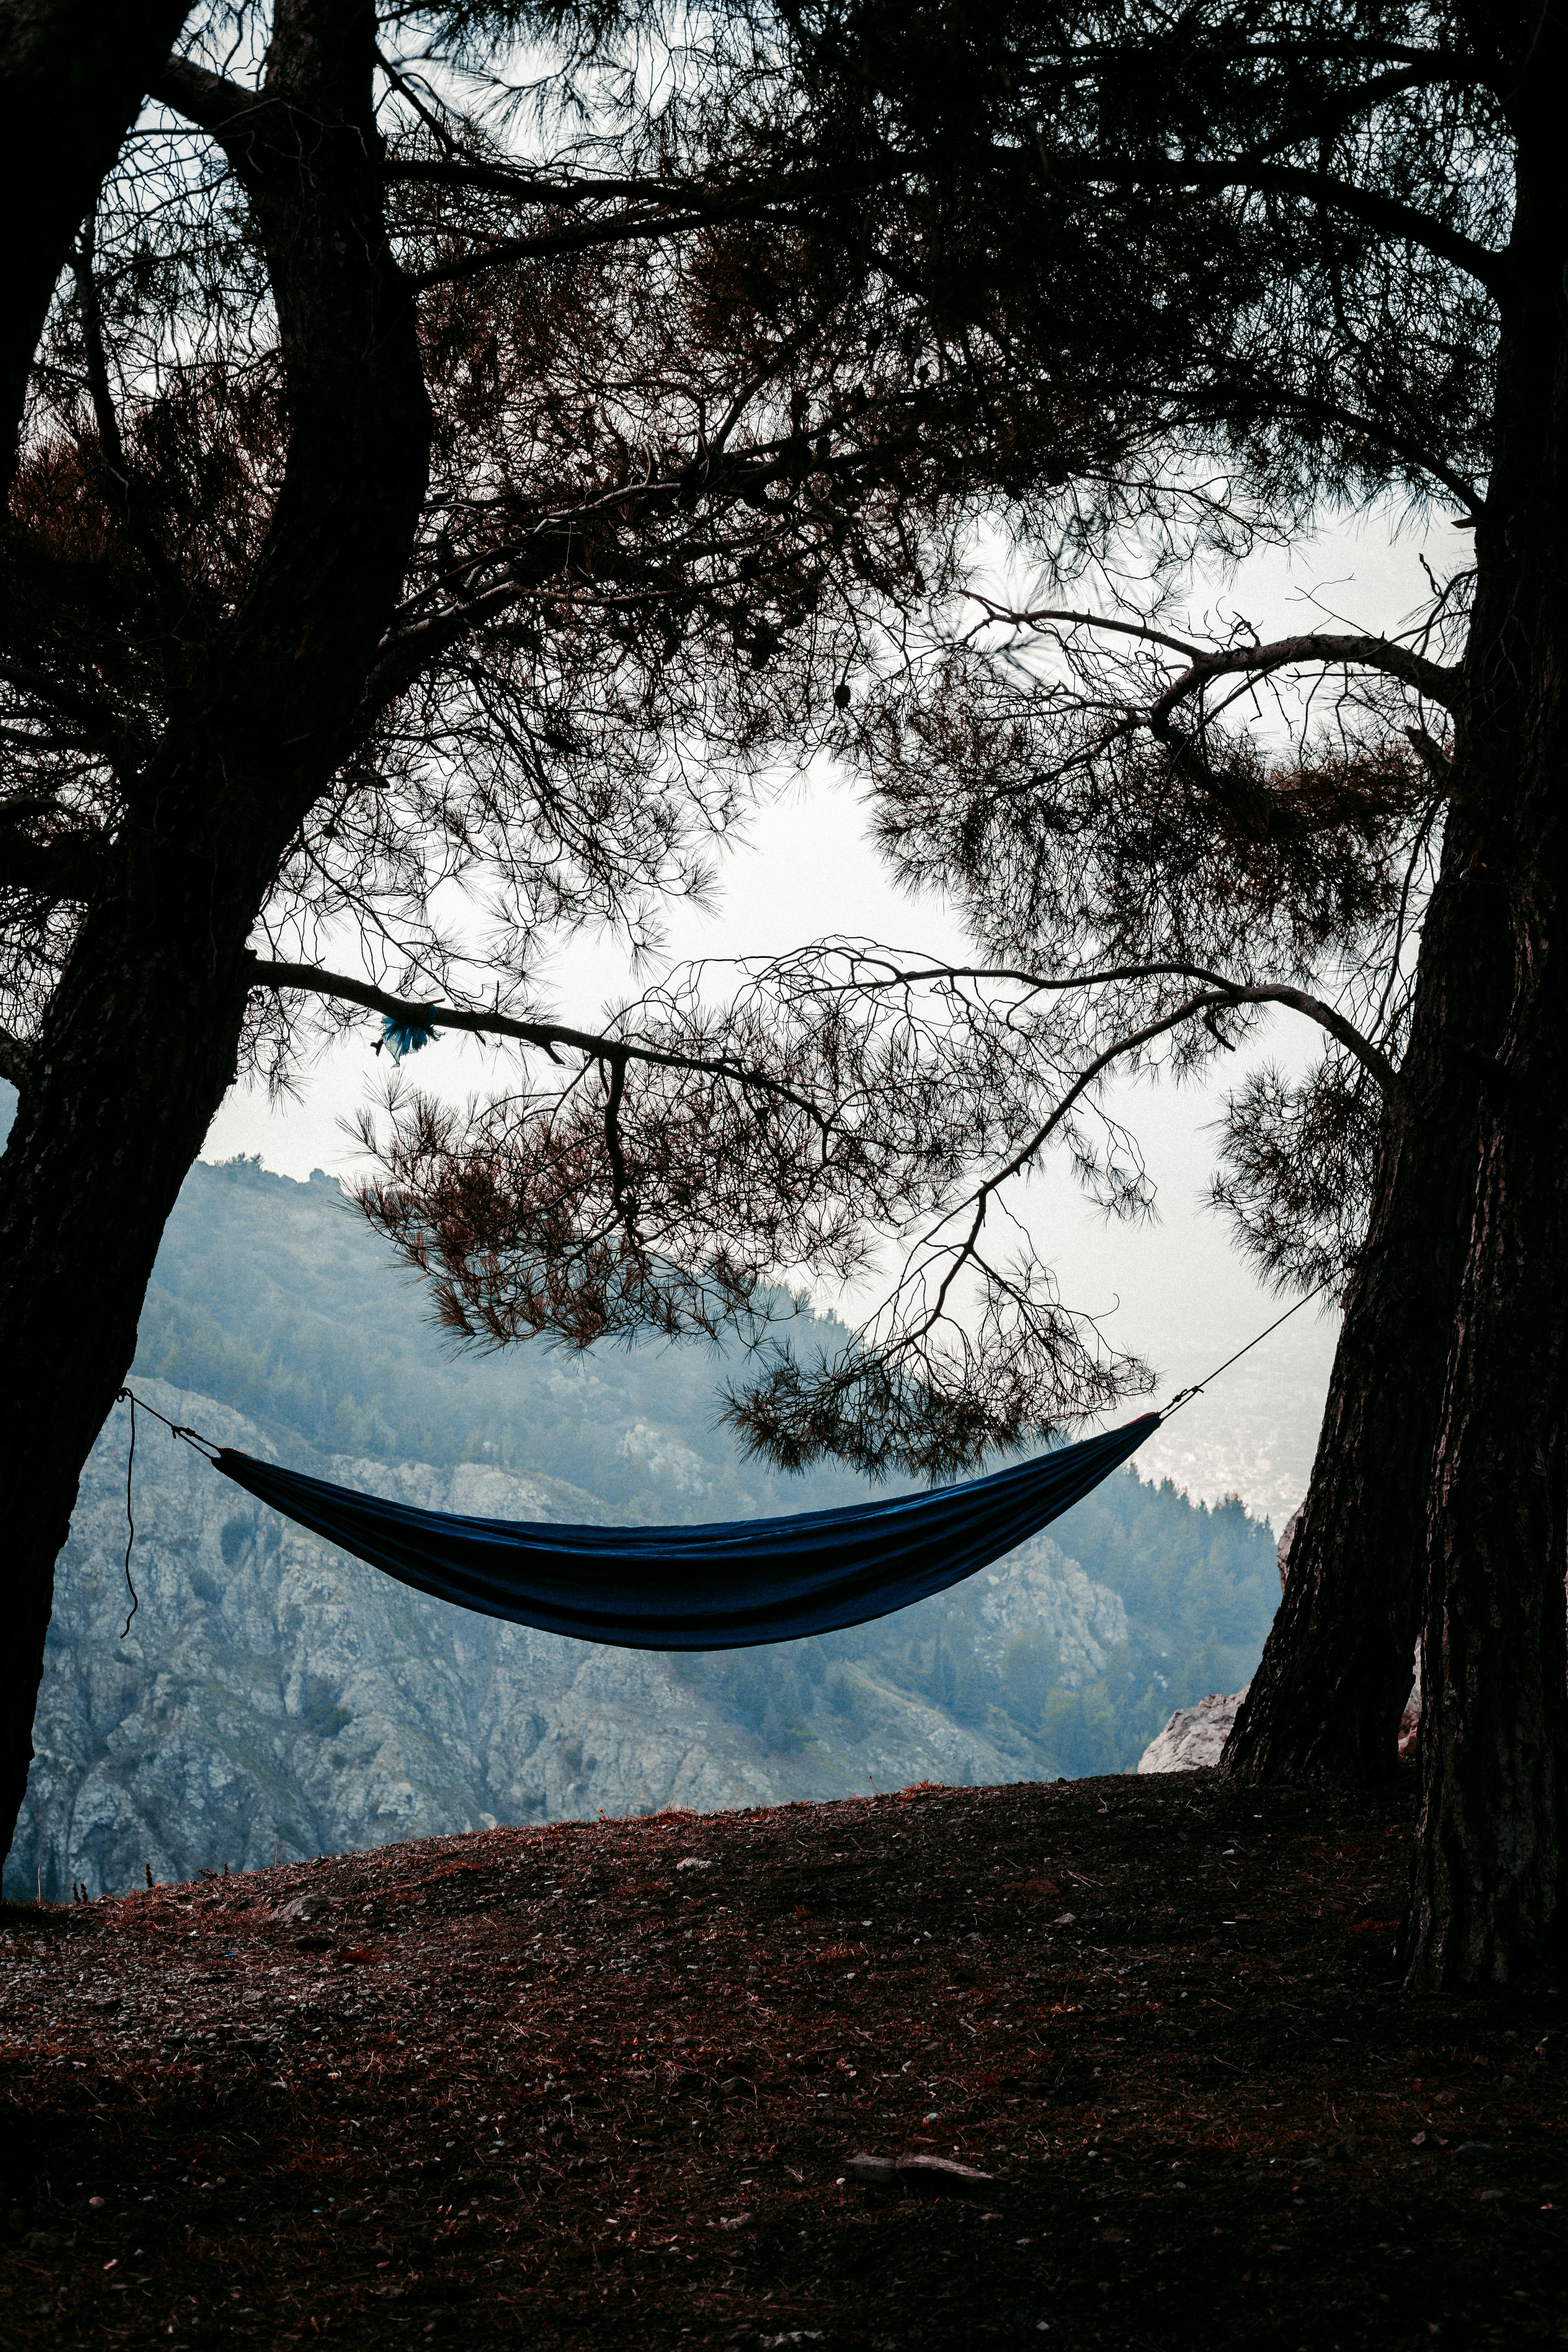 tourist hammock hanging between old trees